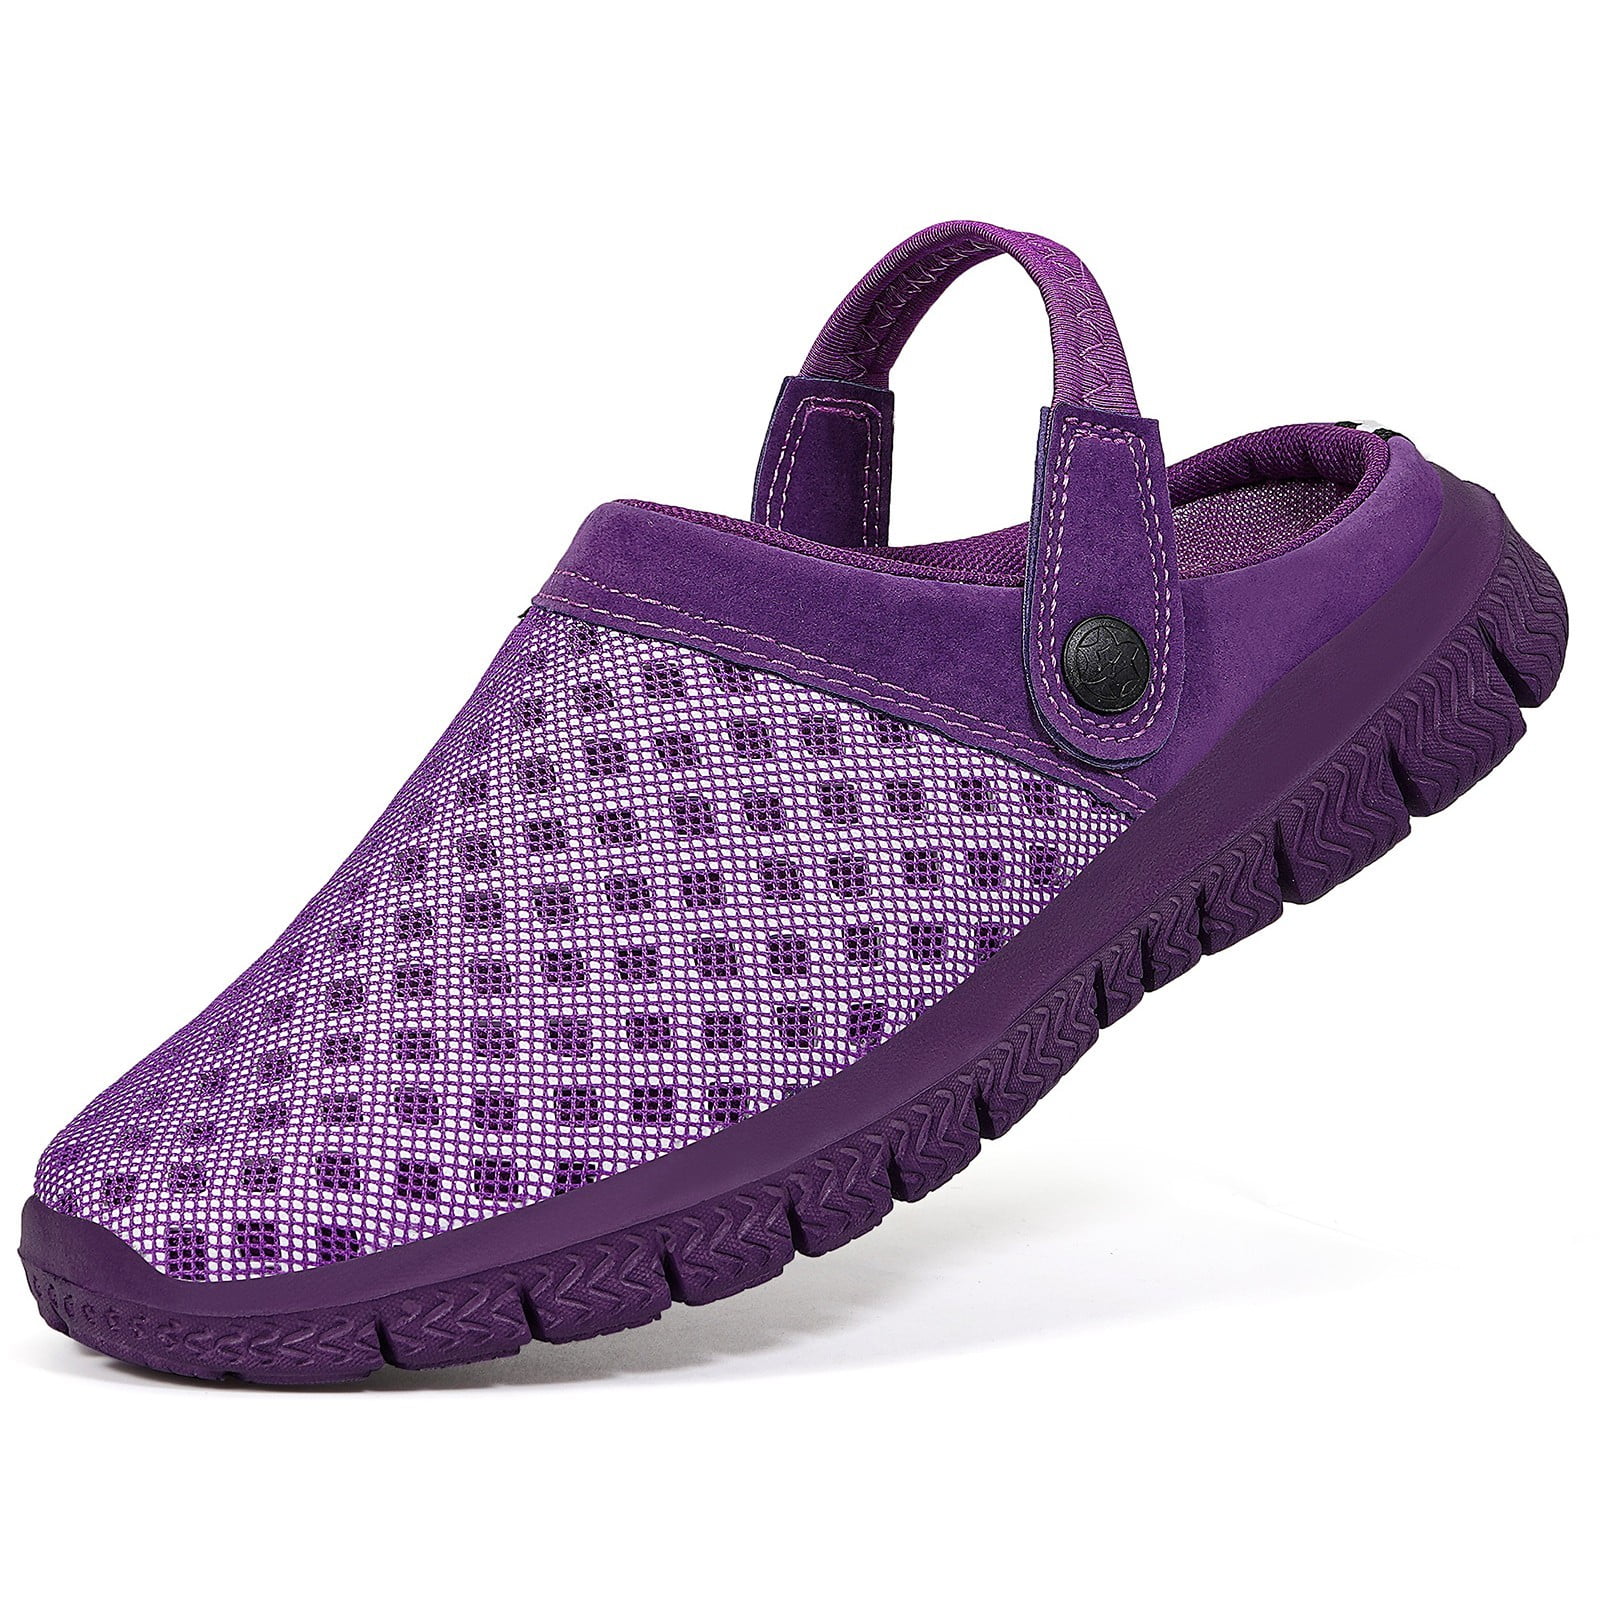 Eagsouni Kids Clogs Boys Girls Garden Shoes Toddlers Slides Sandals Children Lightweight Slip on Slippers 